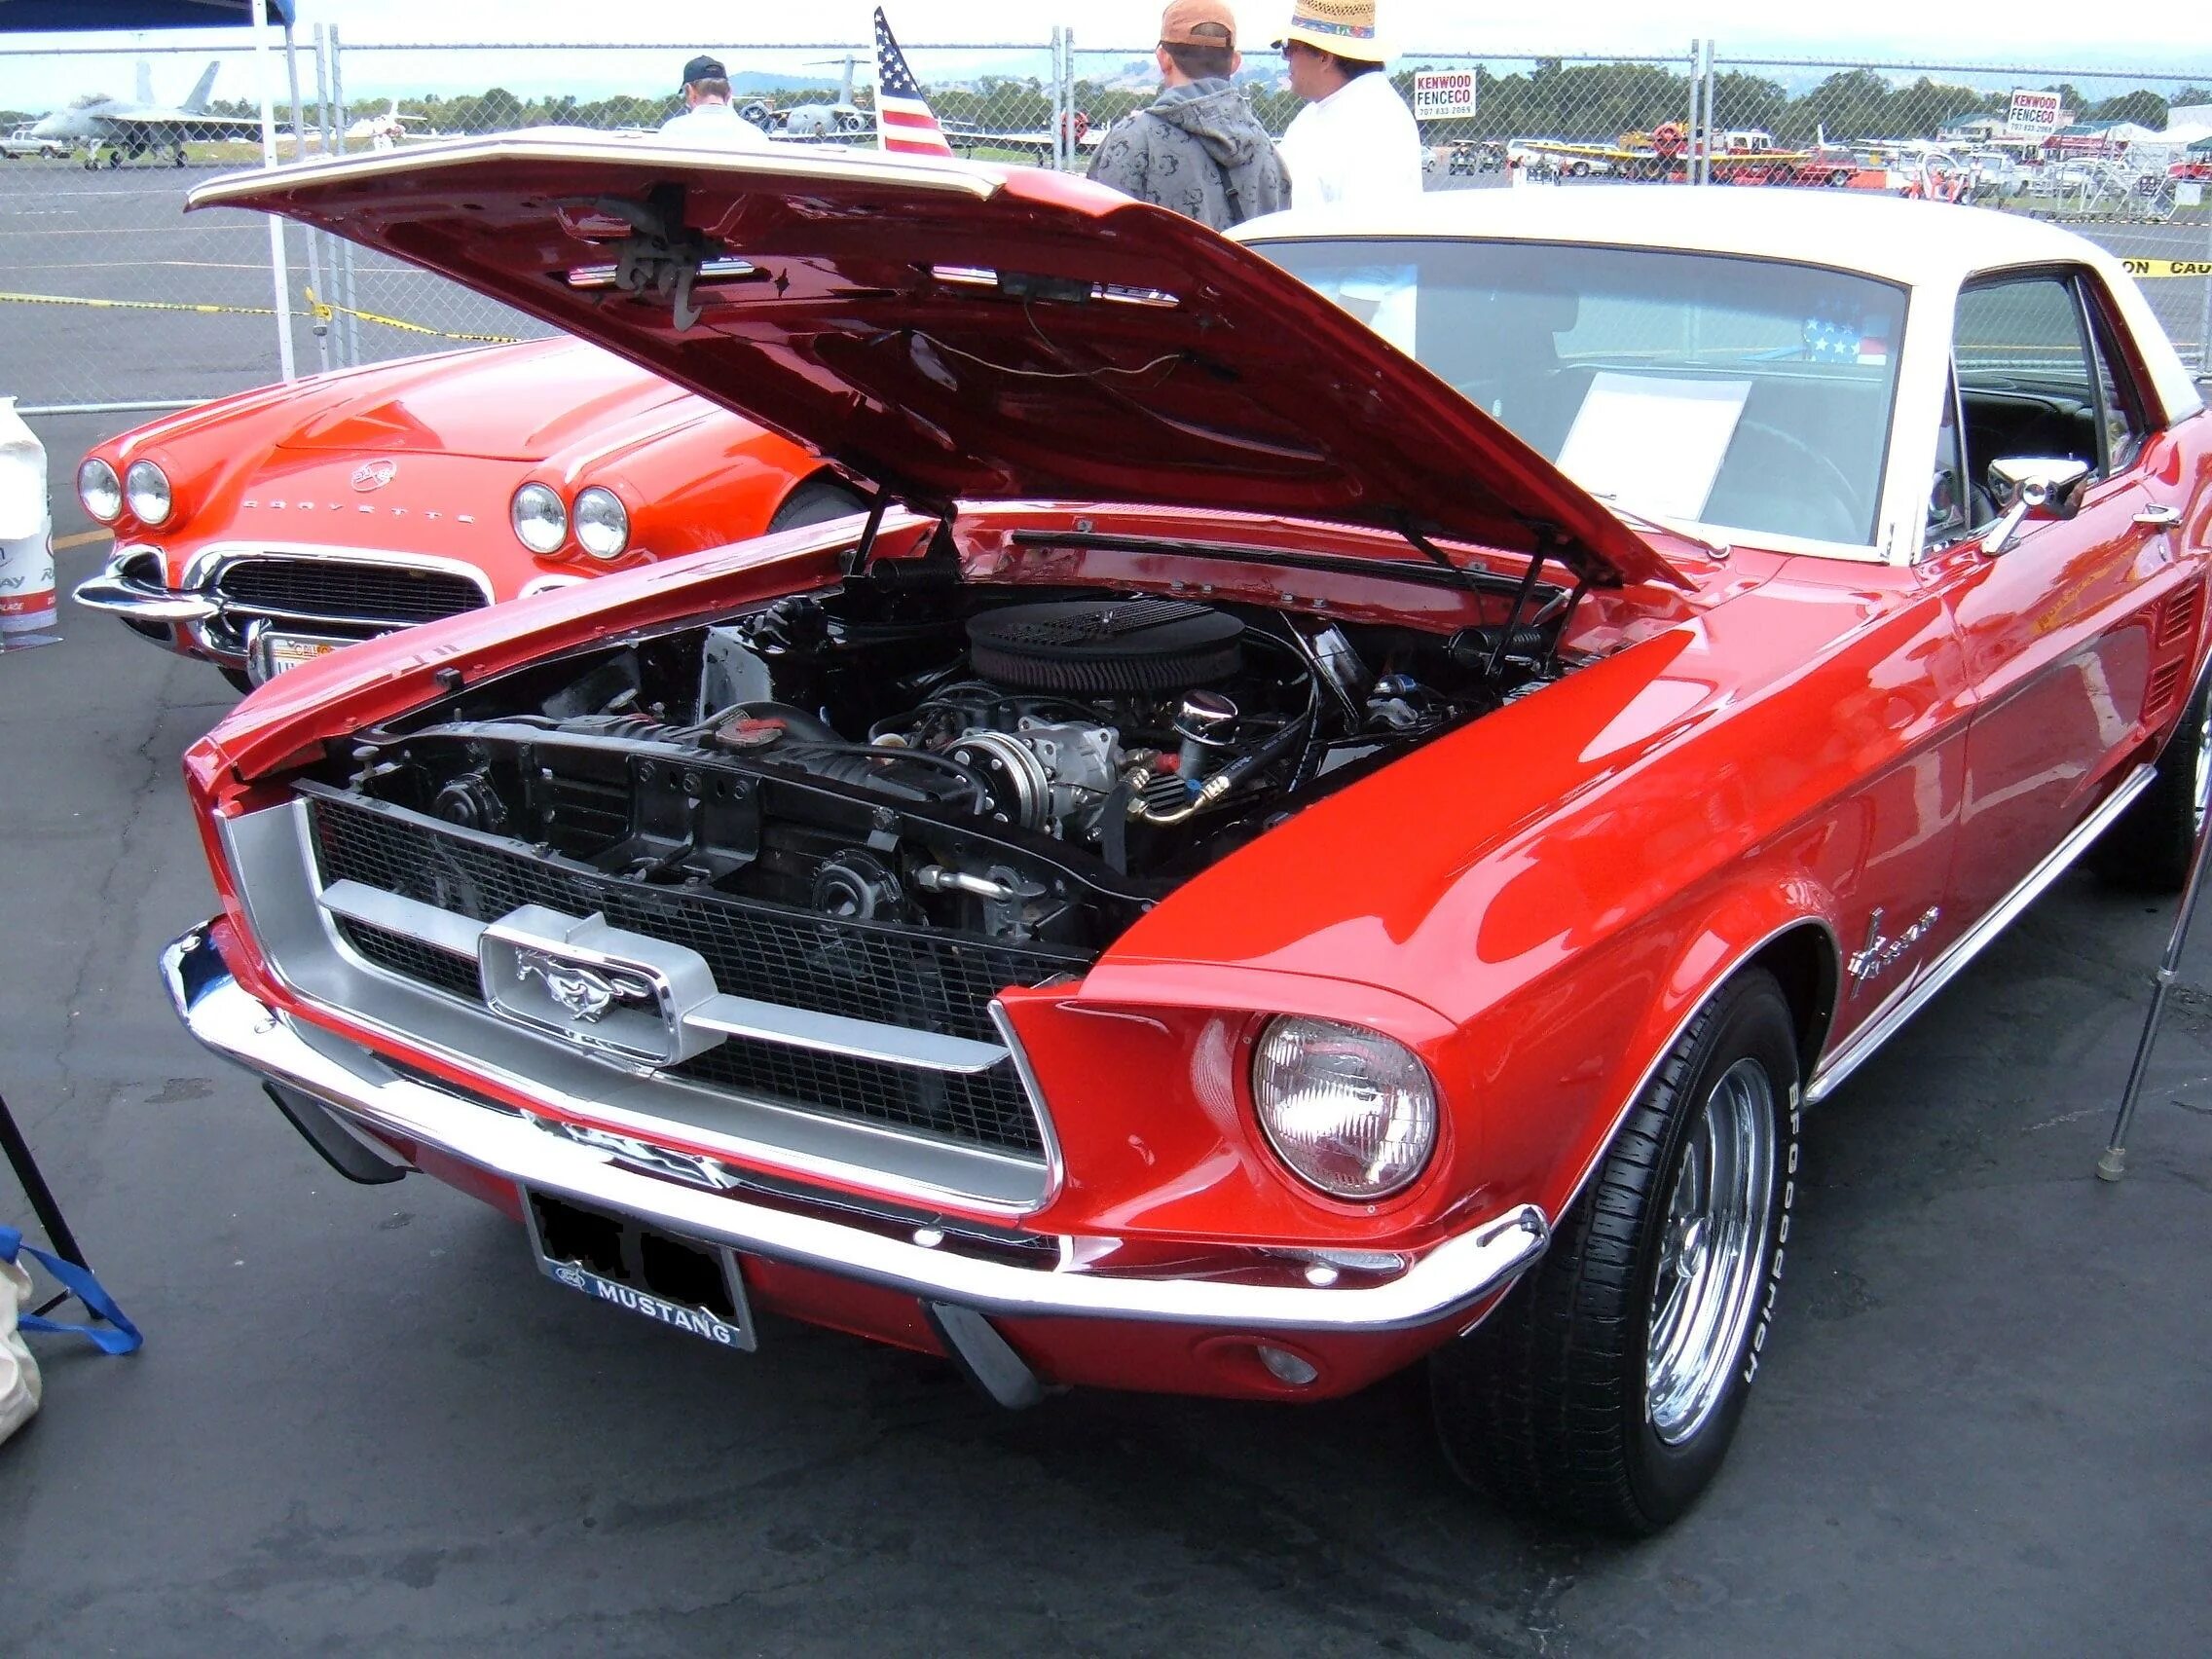 Мустанг кузова. Форд Мустанг 1967. Ford Mustang 1967 engine. Ford Mustang 1967 красный. Двигатель Ford Mustang 1967.